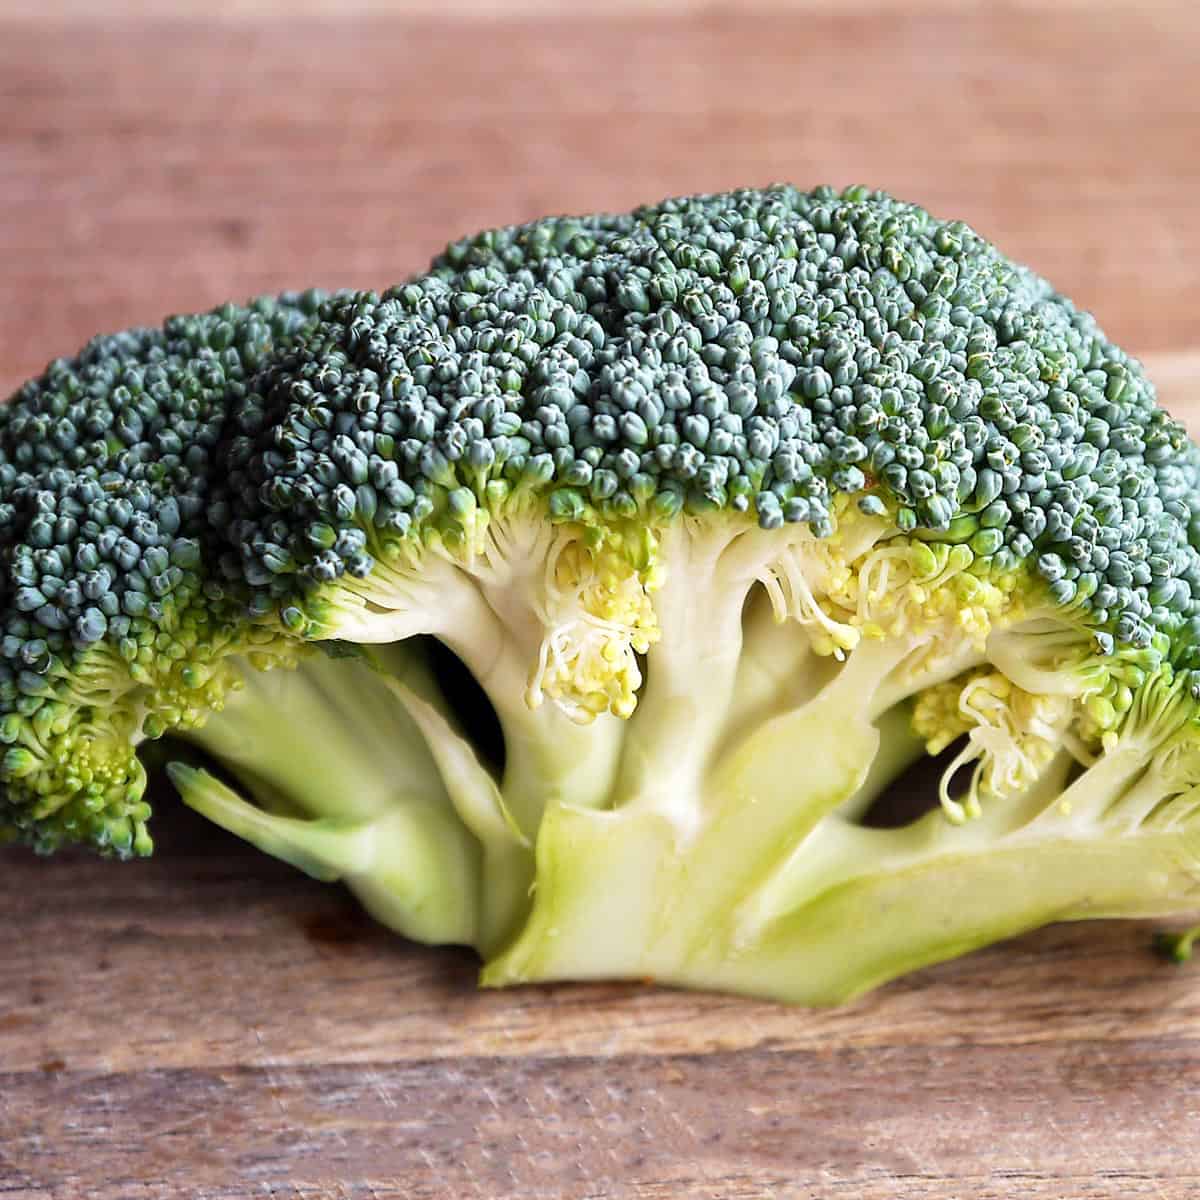 Half head of raw broccoli.